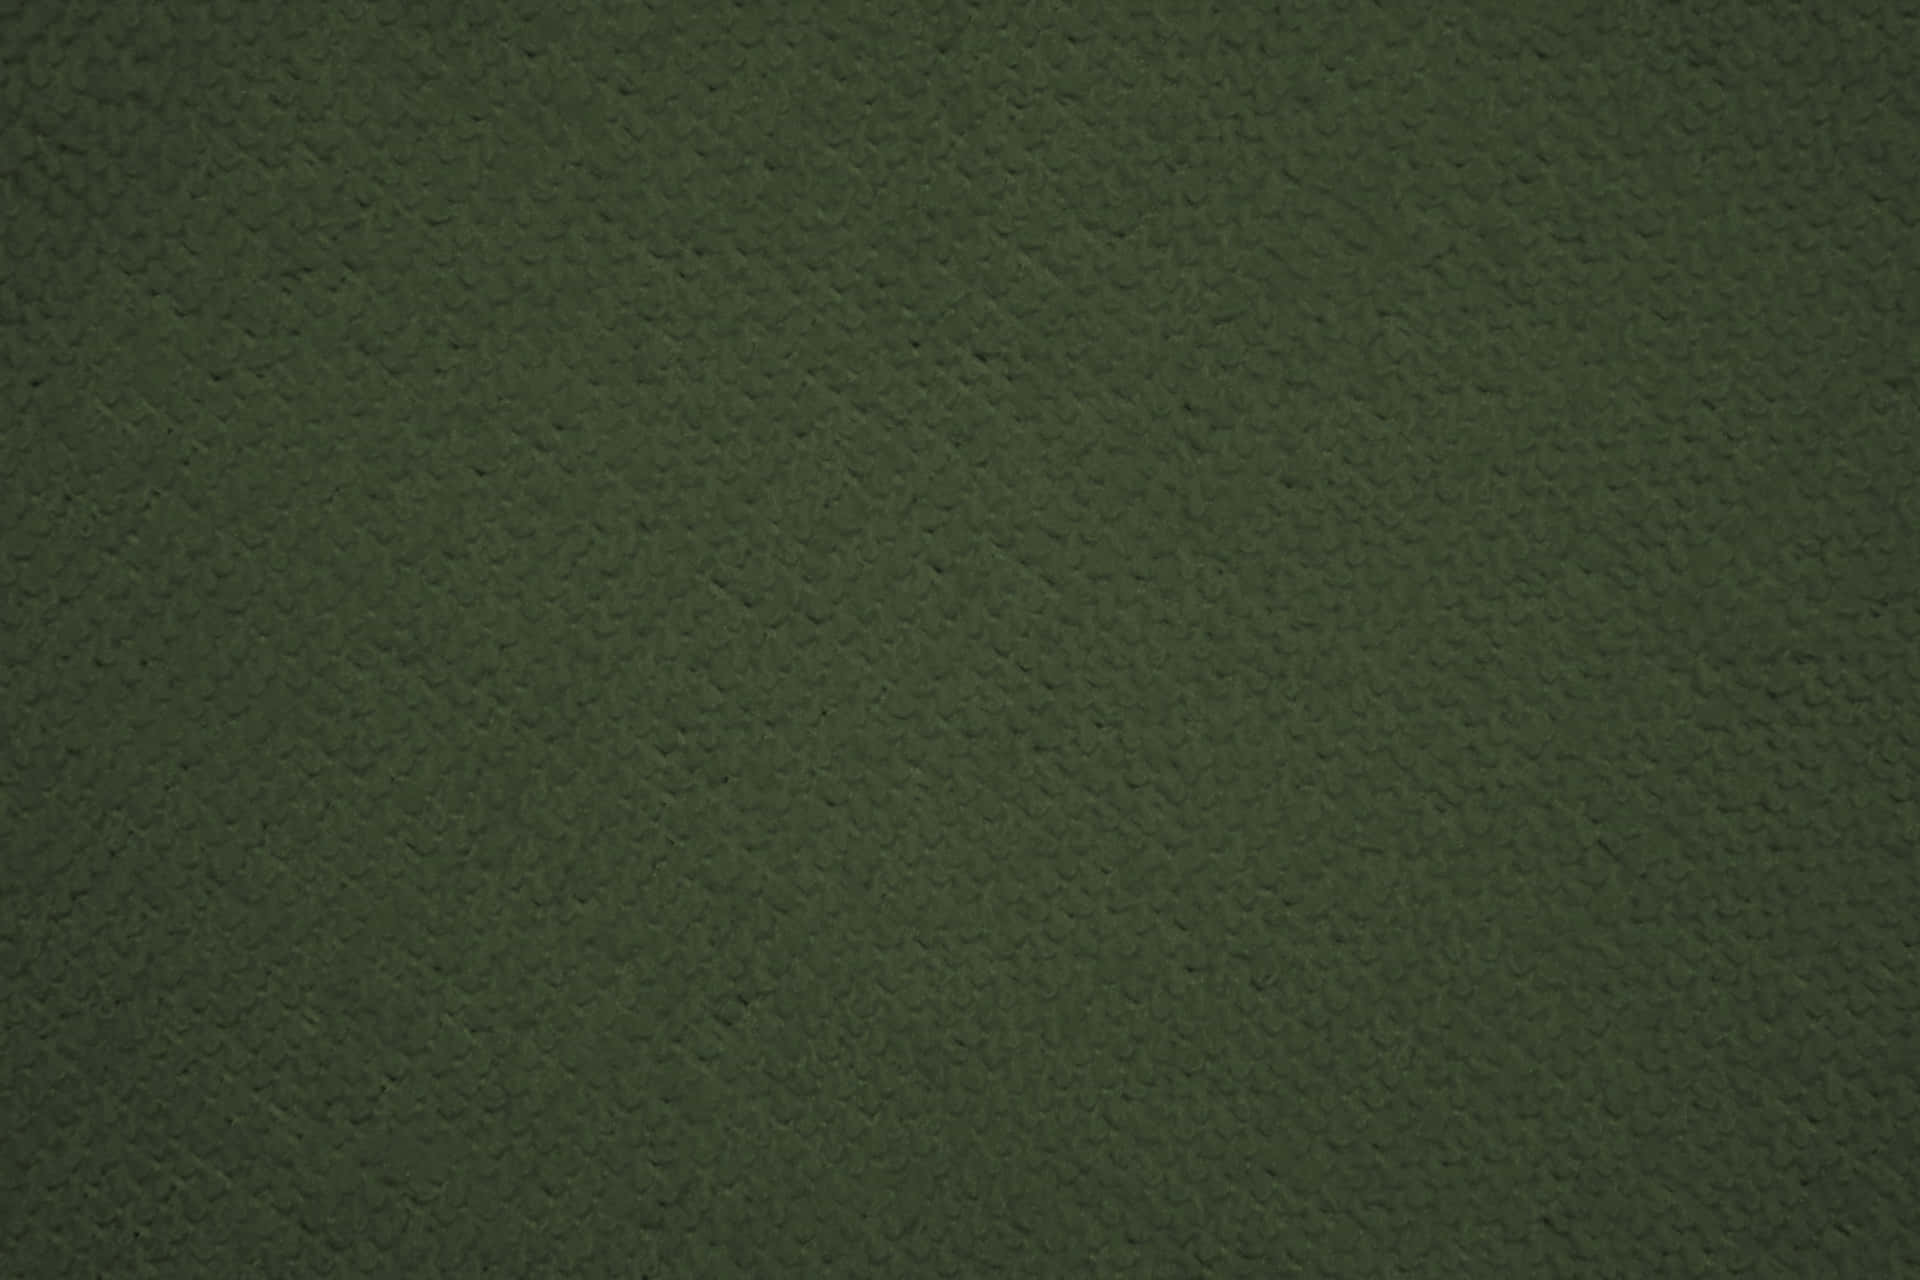 Textured Olive Greenaesthetic Desktop Wallpaper